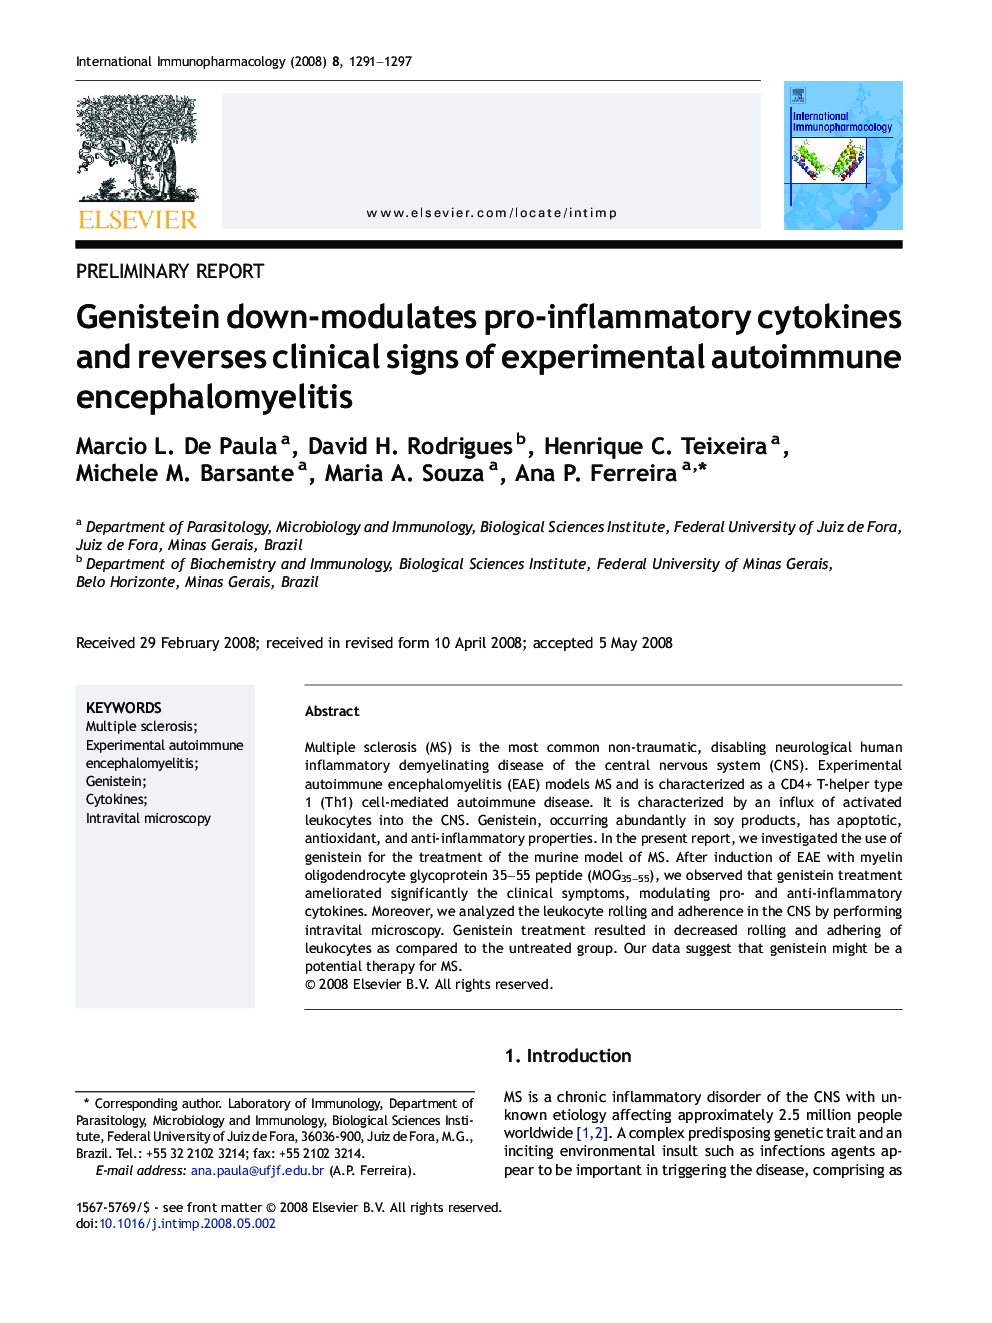 Genistein down-modulates pro-inflammatory cytokines and reverses clinical signs of experimental autoimmune encephalomyelitis